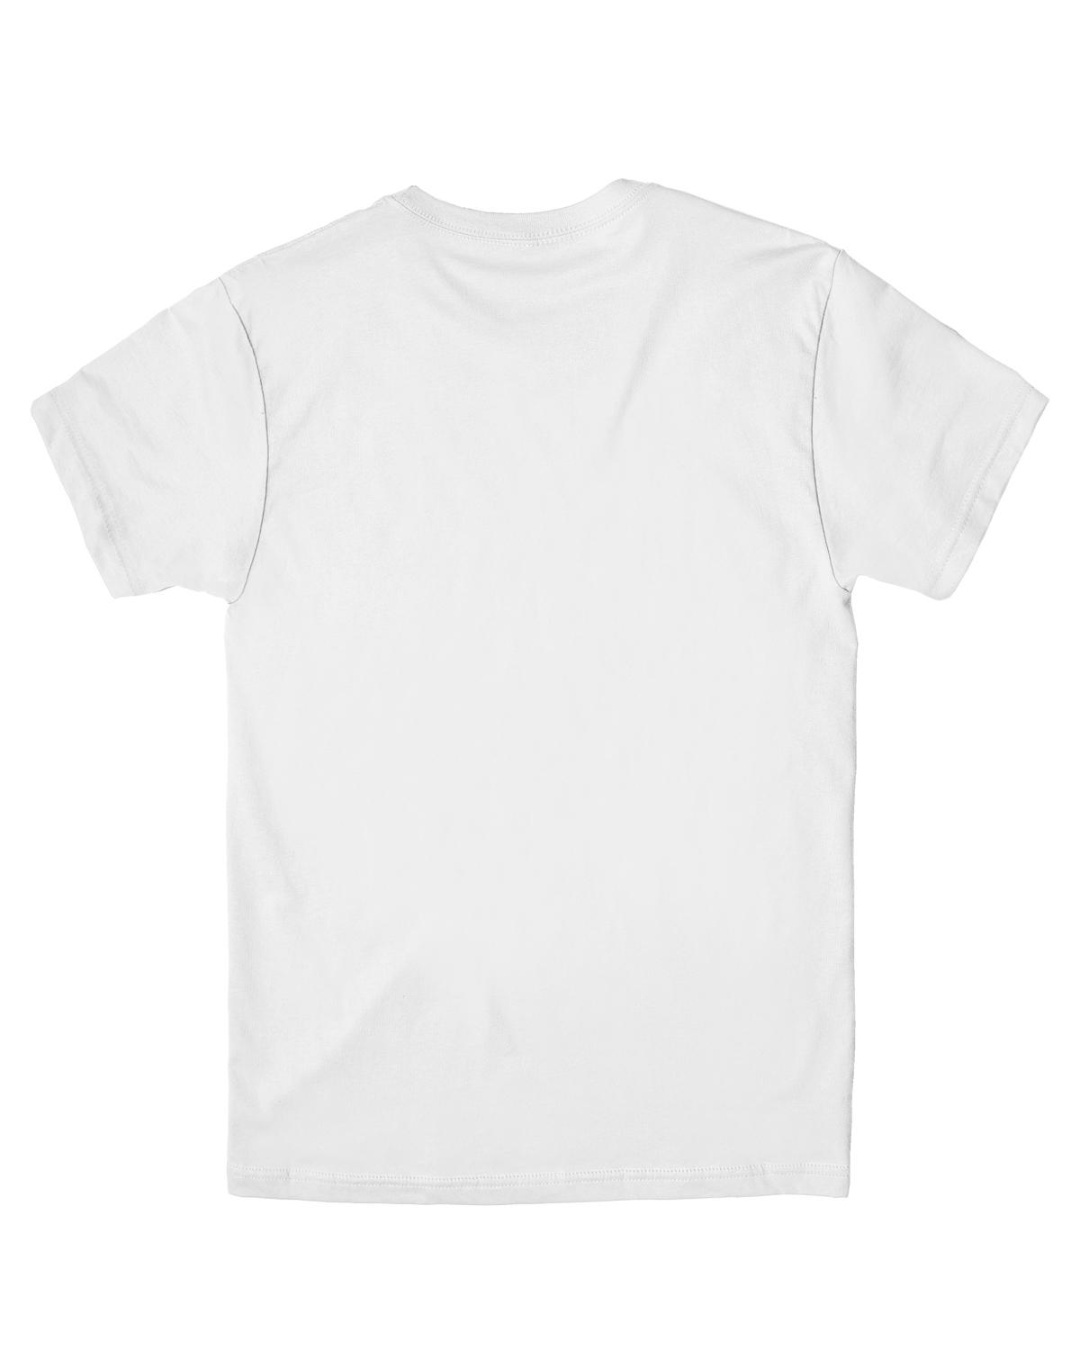 Shop Boys White Rings Loops Graphic Printed T Shirt-Back